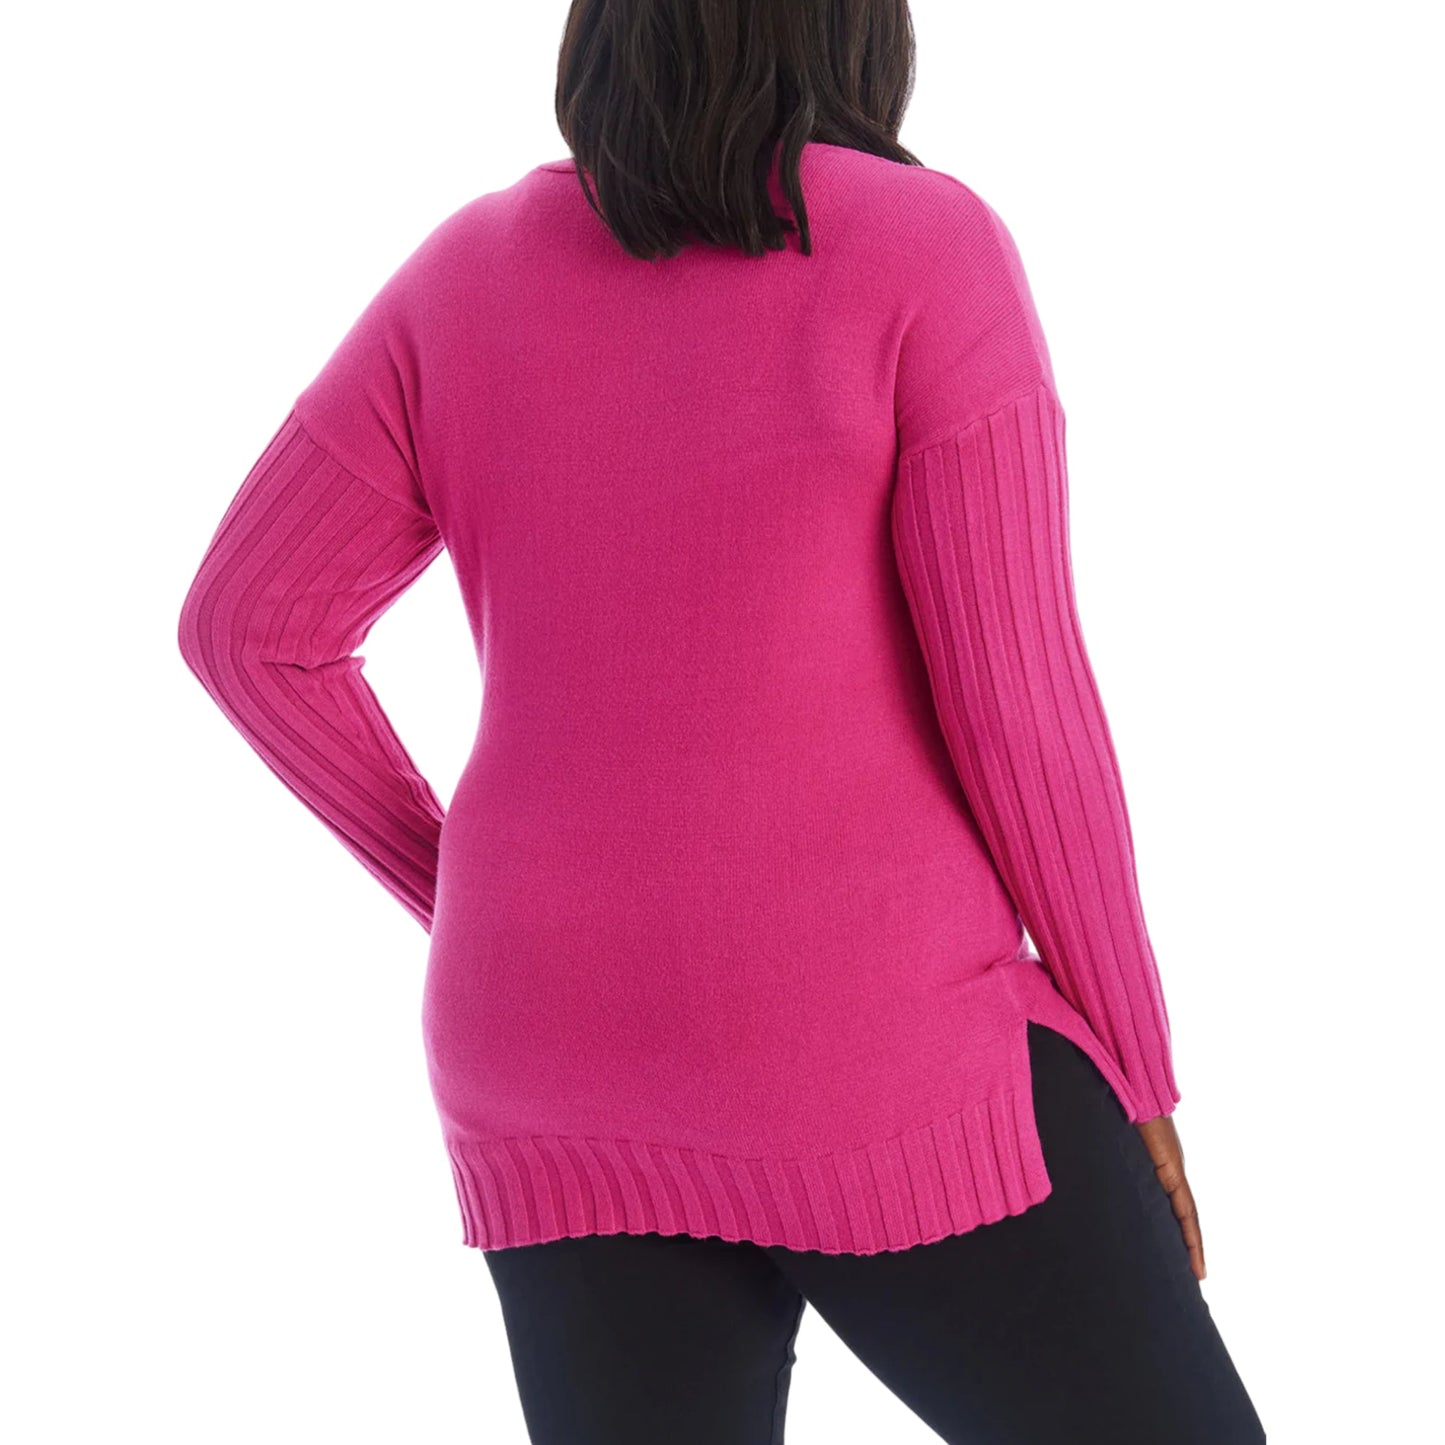 Adyson Parker Women's V-Neck Pullover Soft Knit Tunic Top Sweater